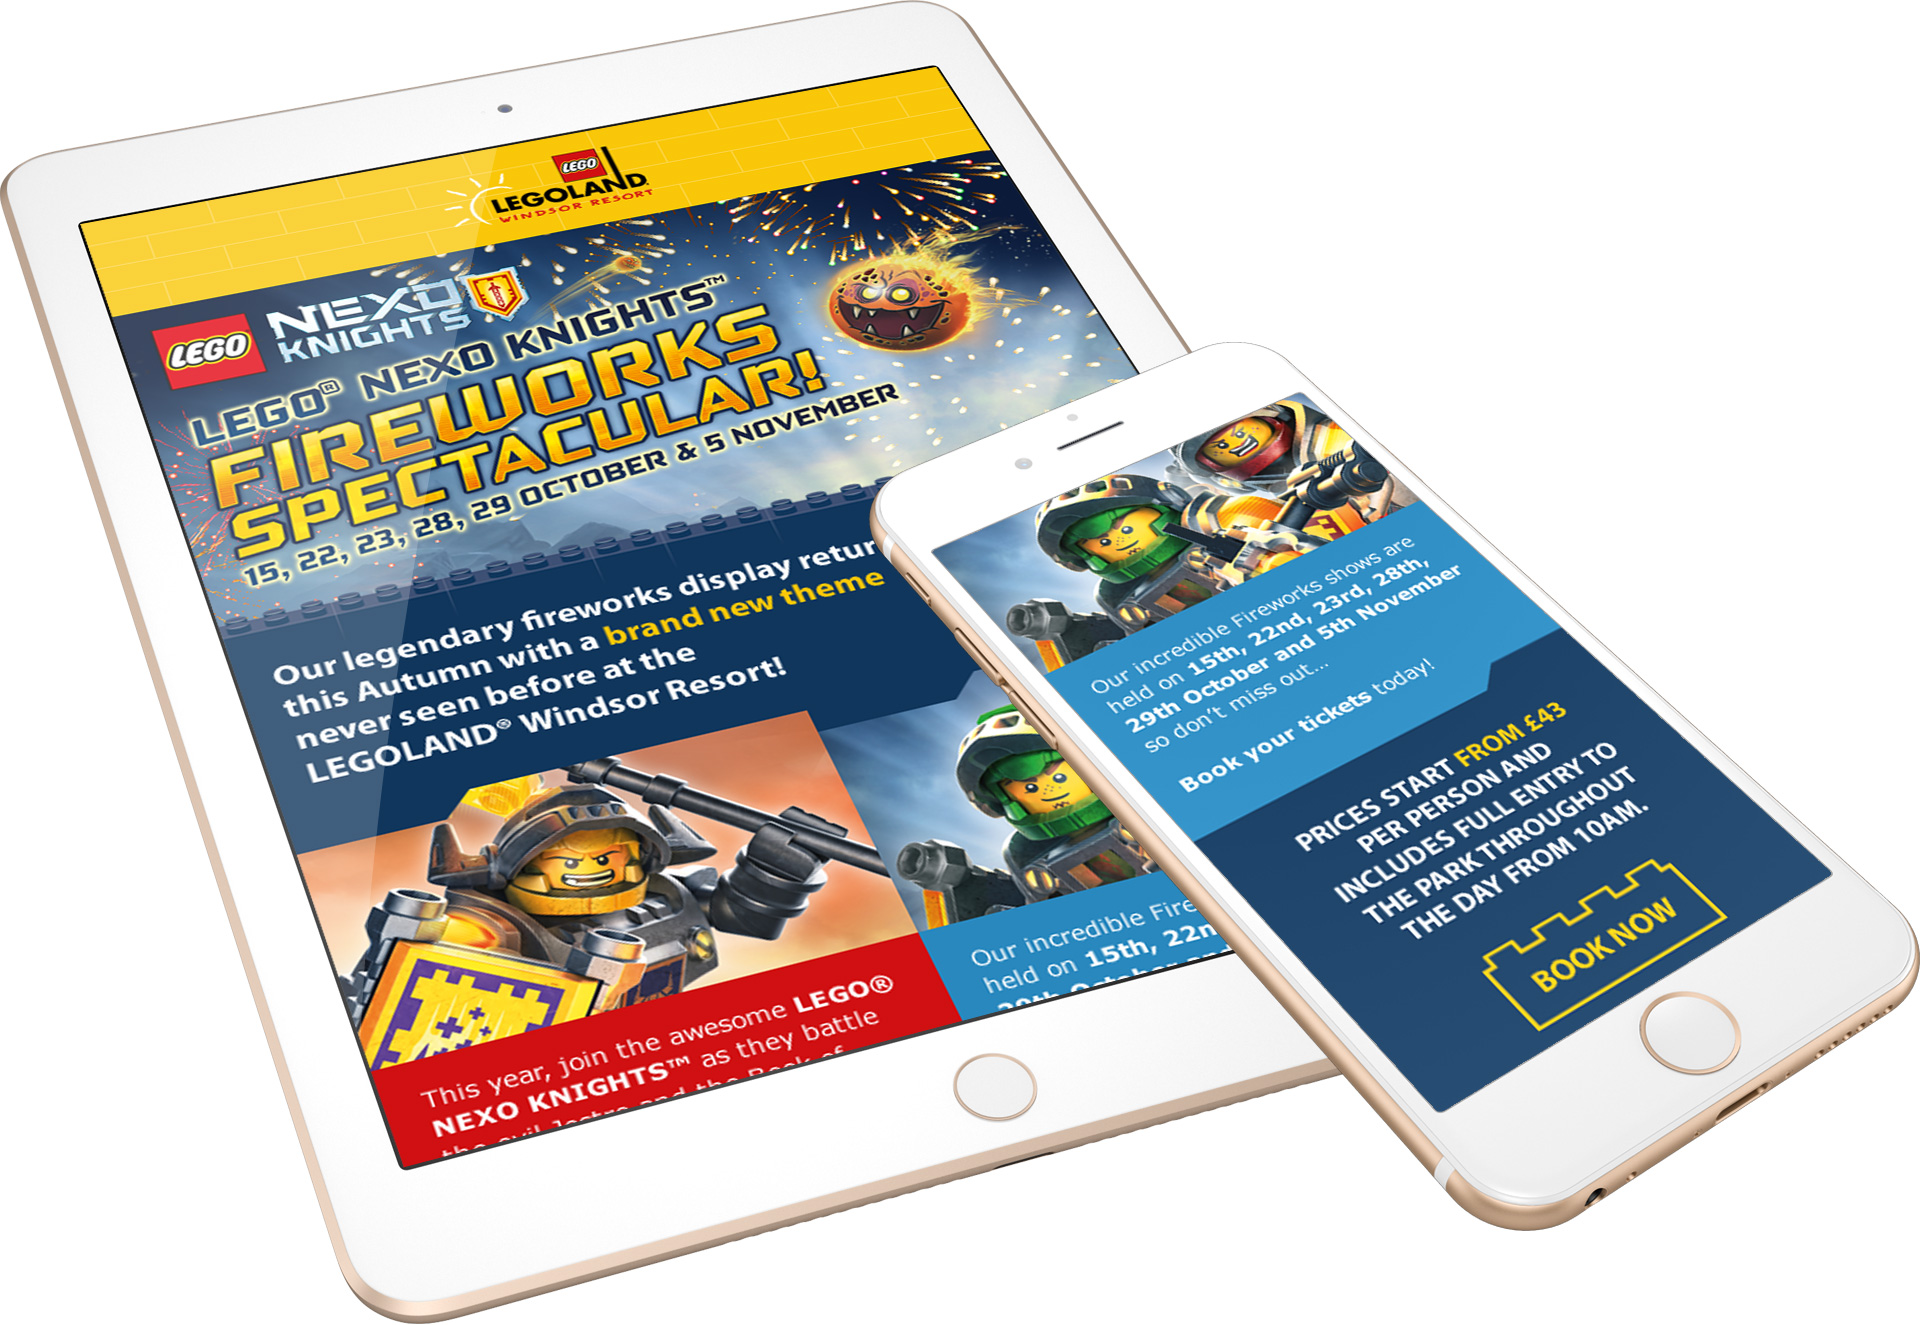 Legoland Nexo Knights Email Campaign Screens